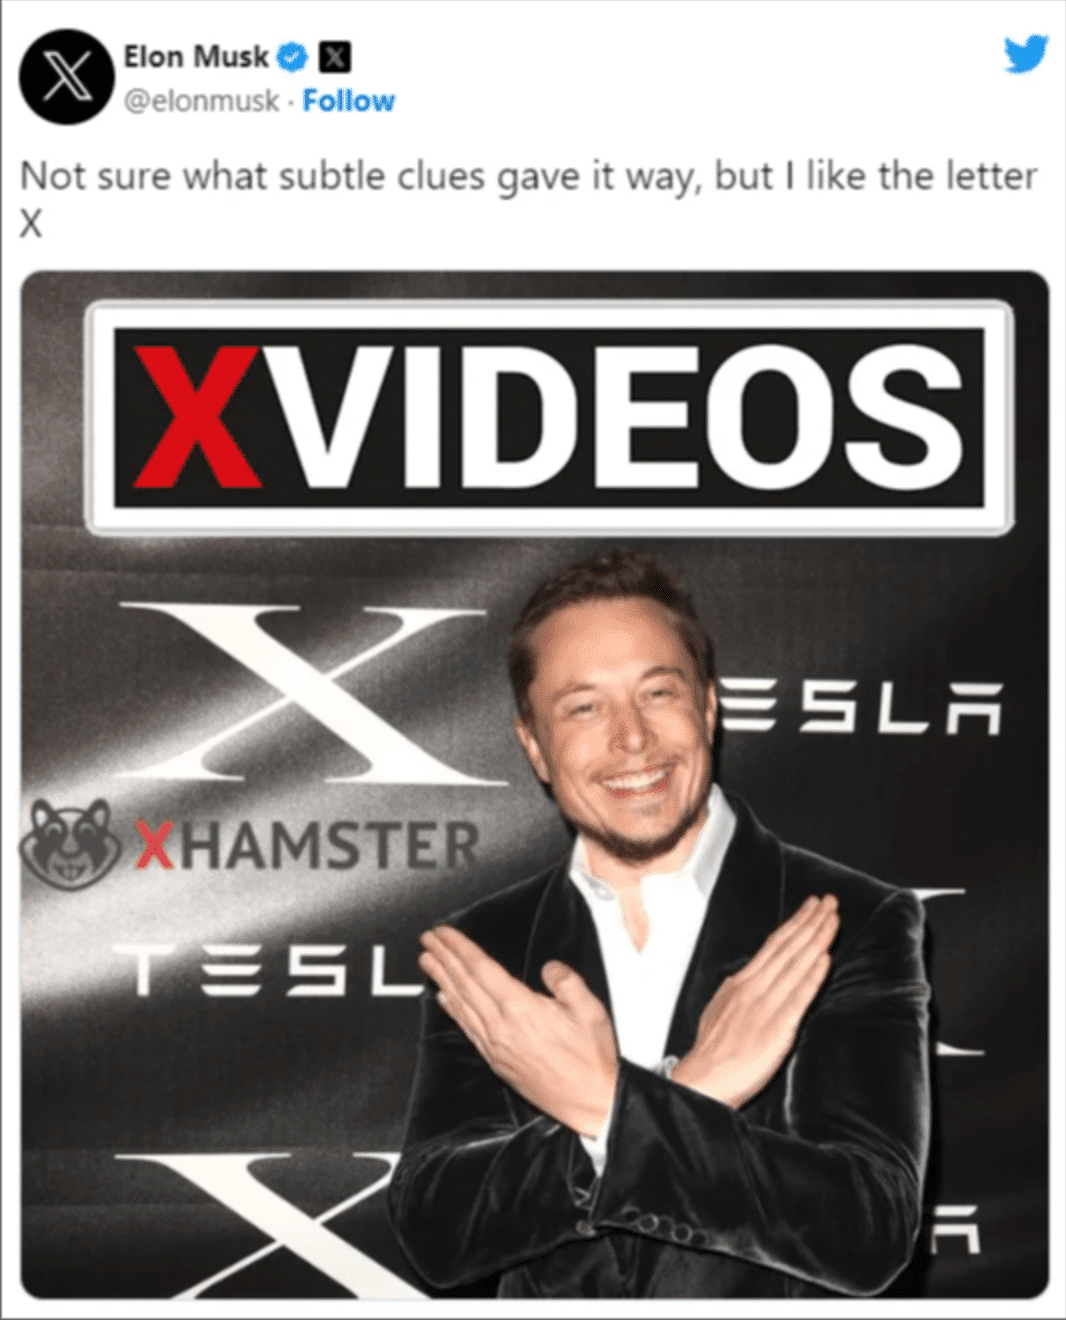 Elon Musk Buys XVideos